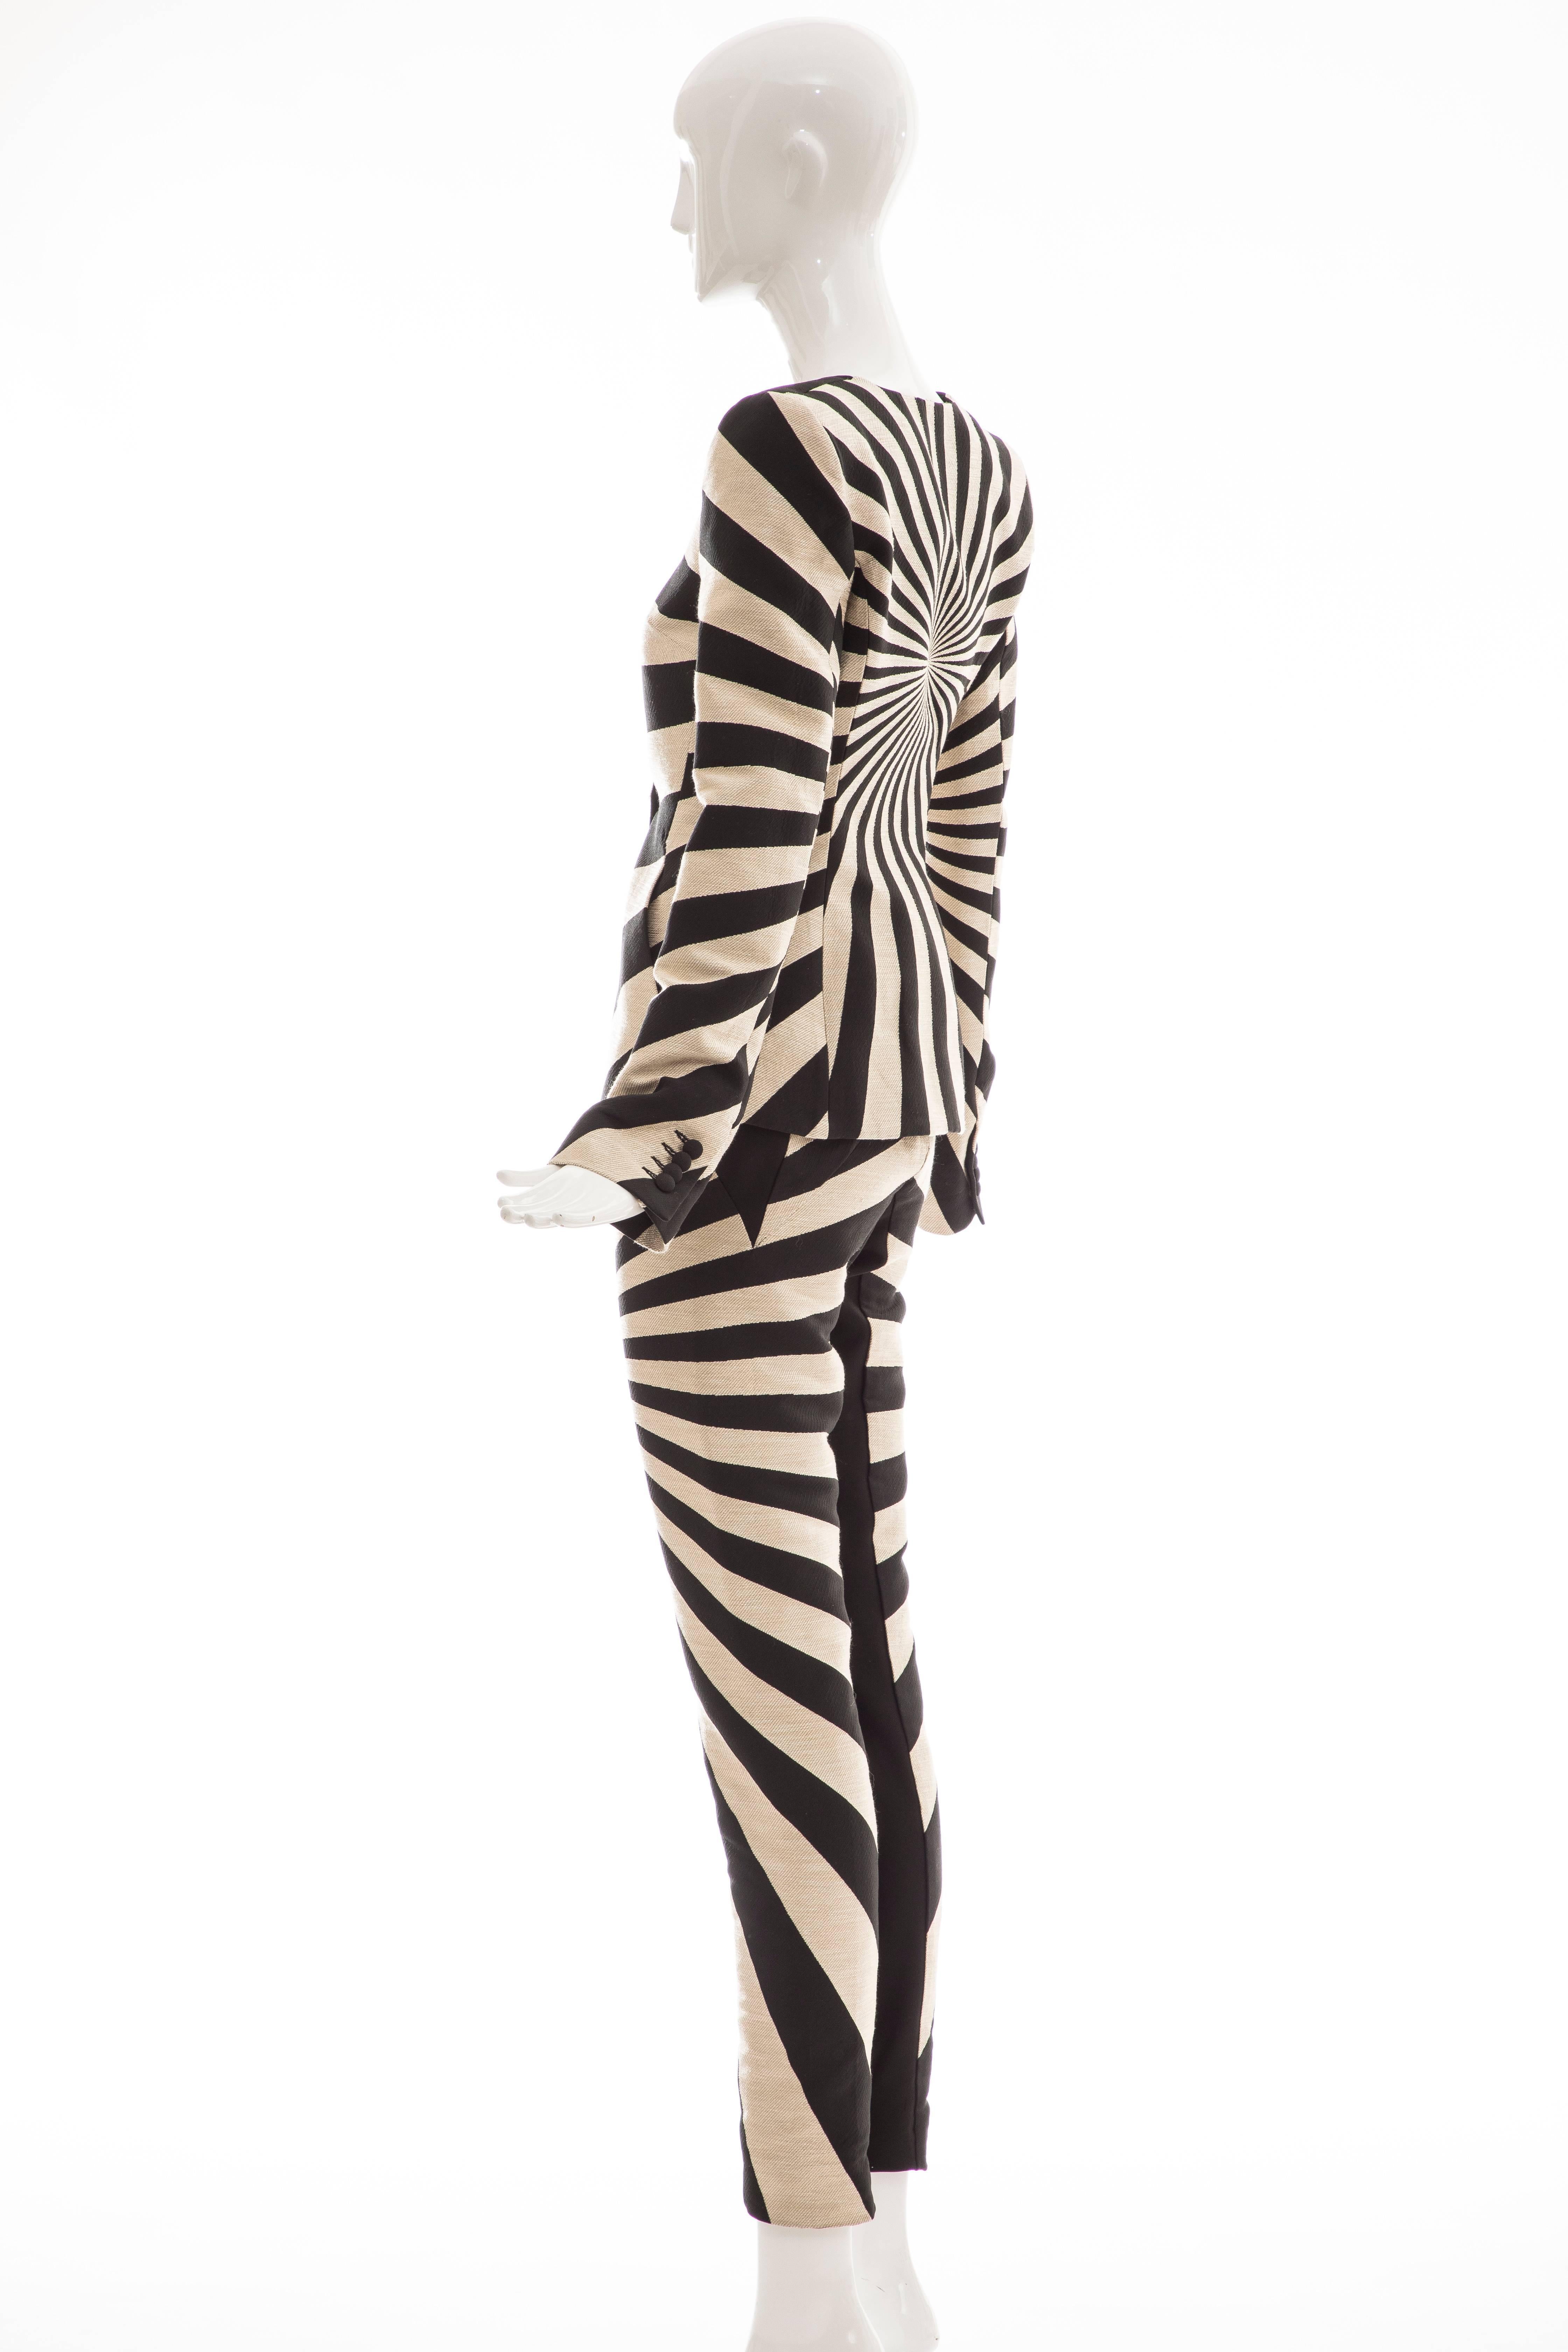 Gareth Pugh Woven Striped Pattern Pantsuit, Spring 2017 For Sale 4